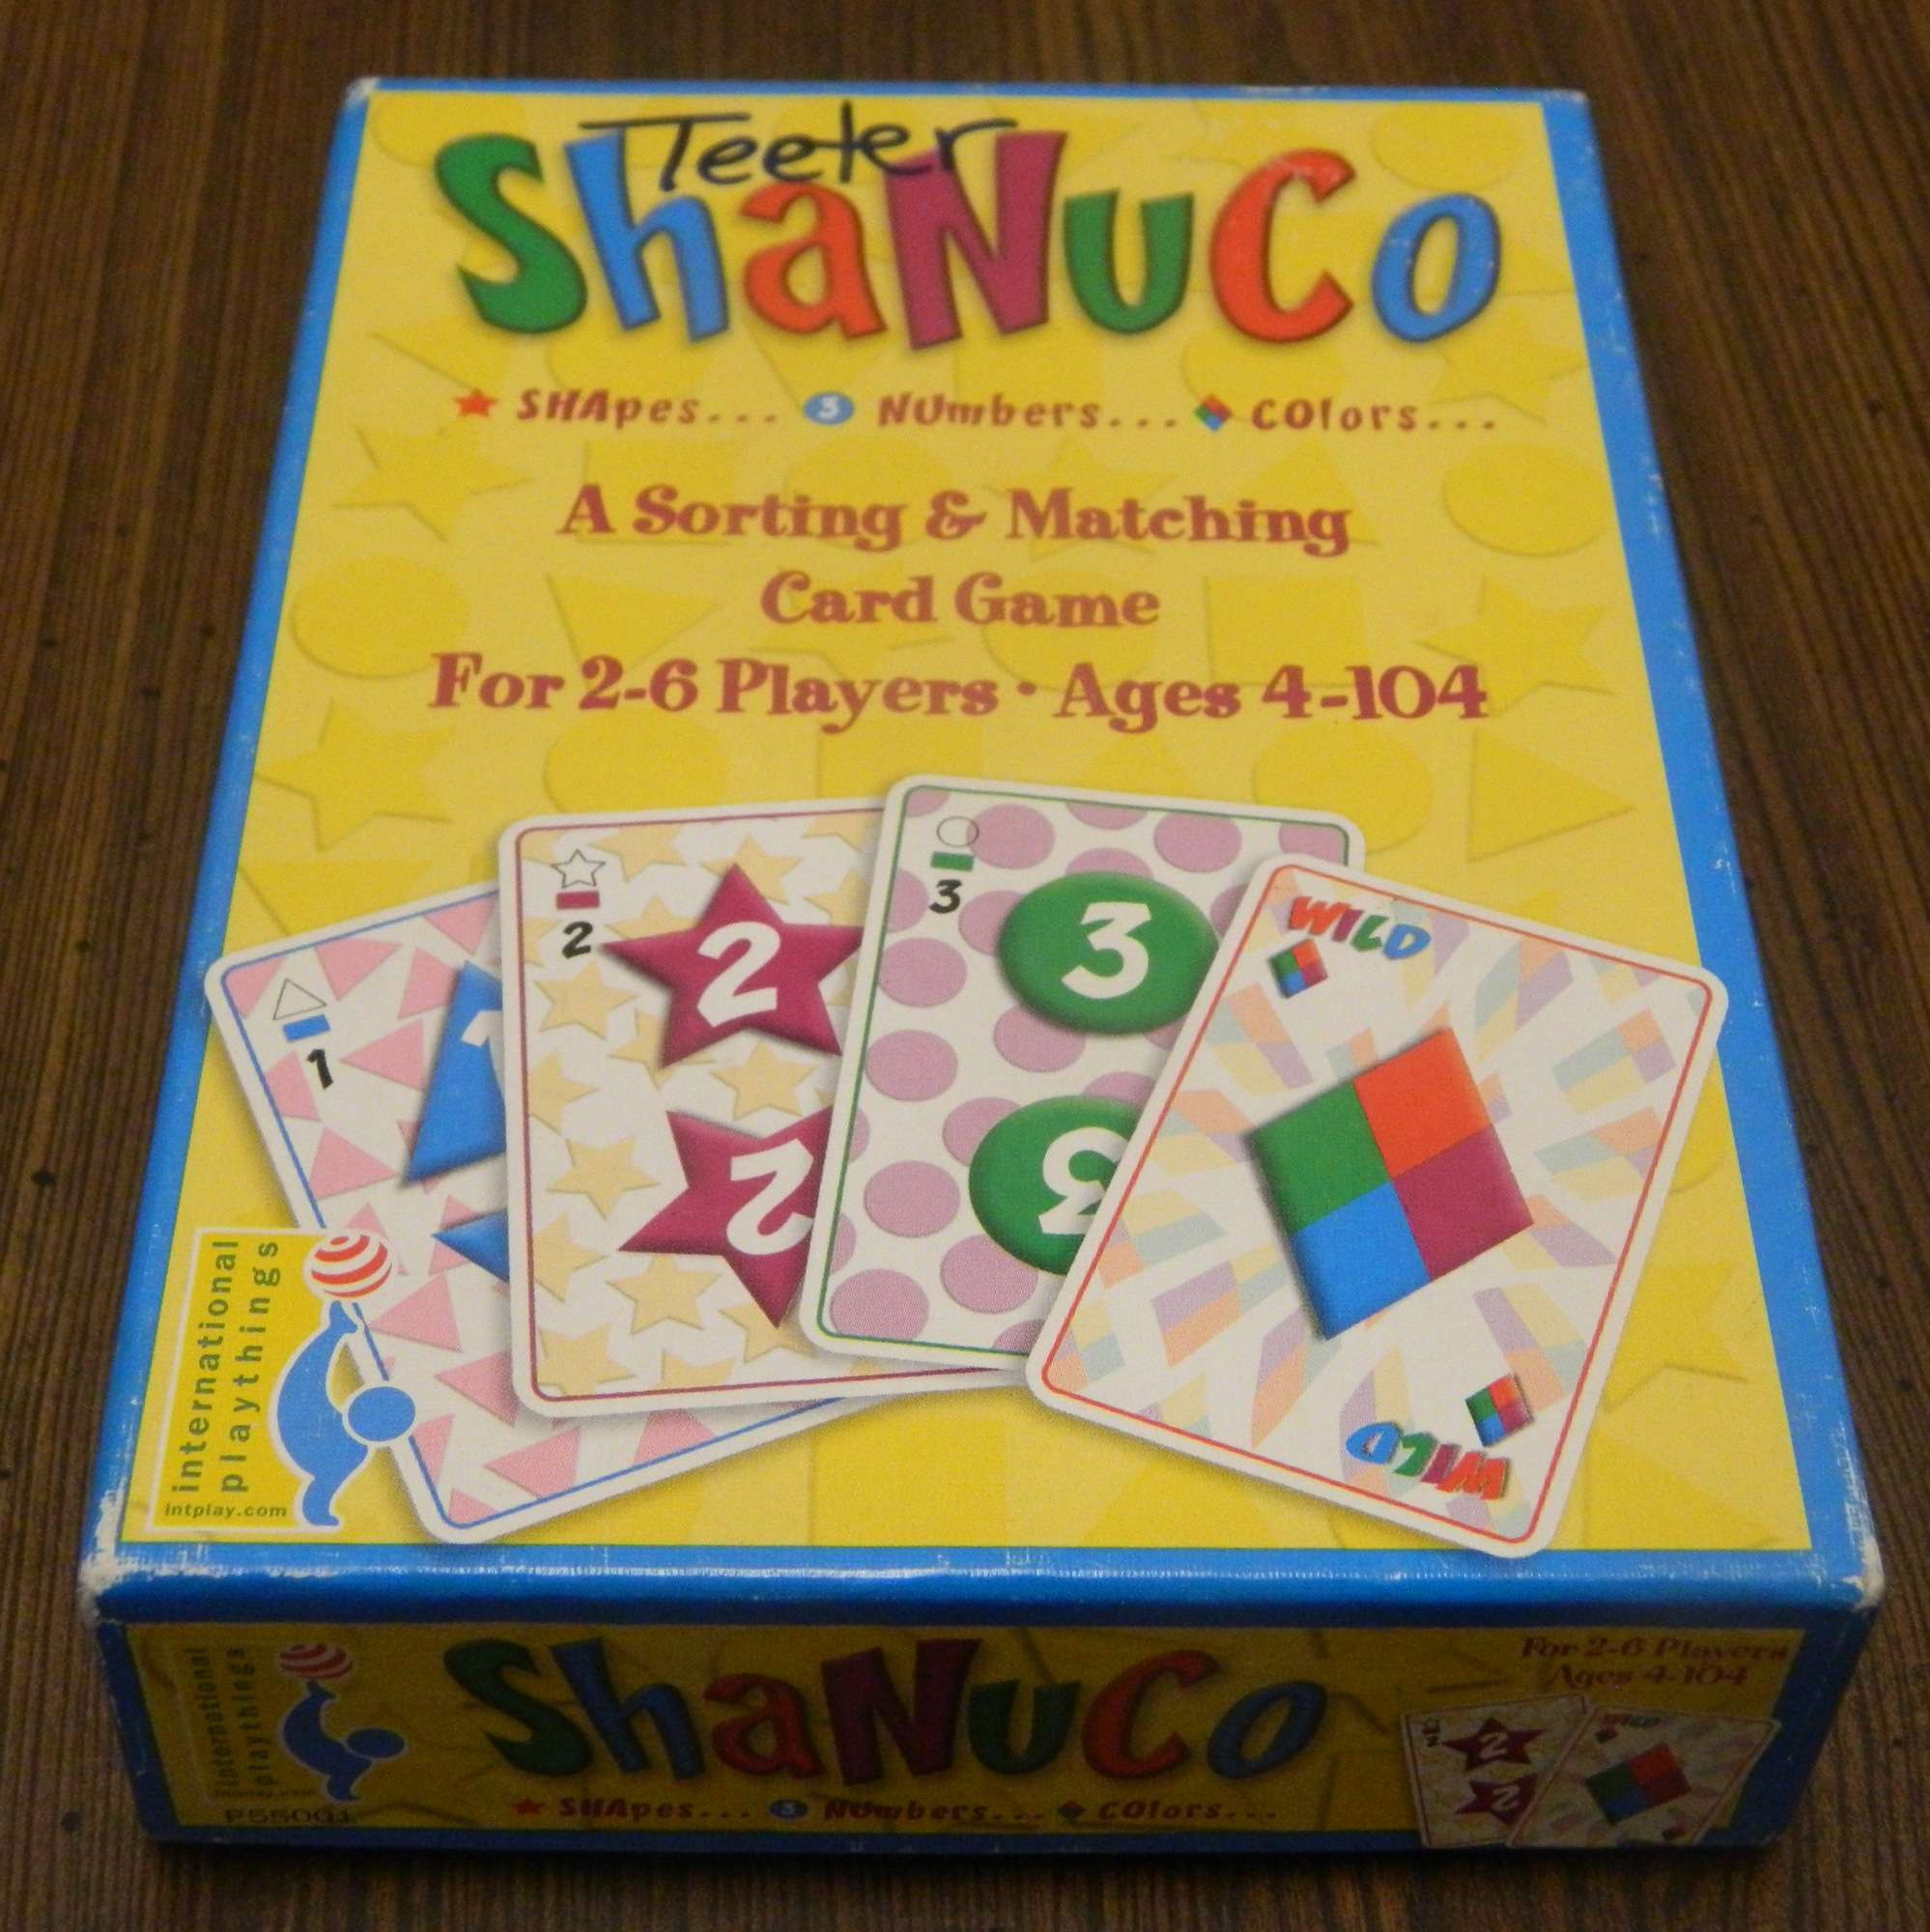 Shanuco Card Game Review